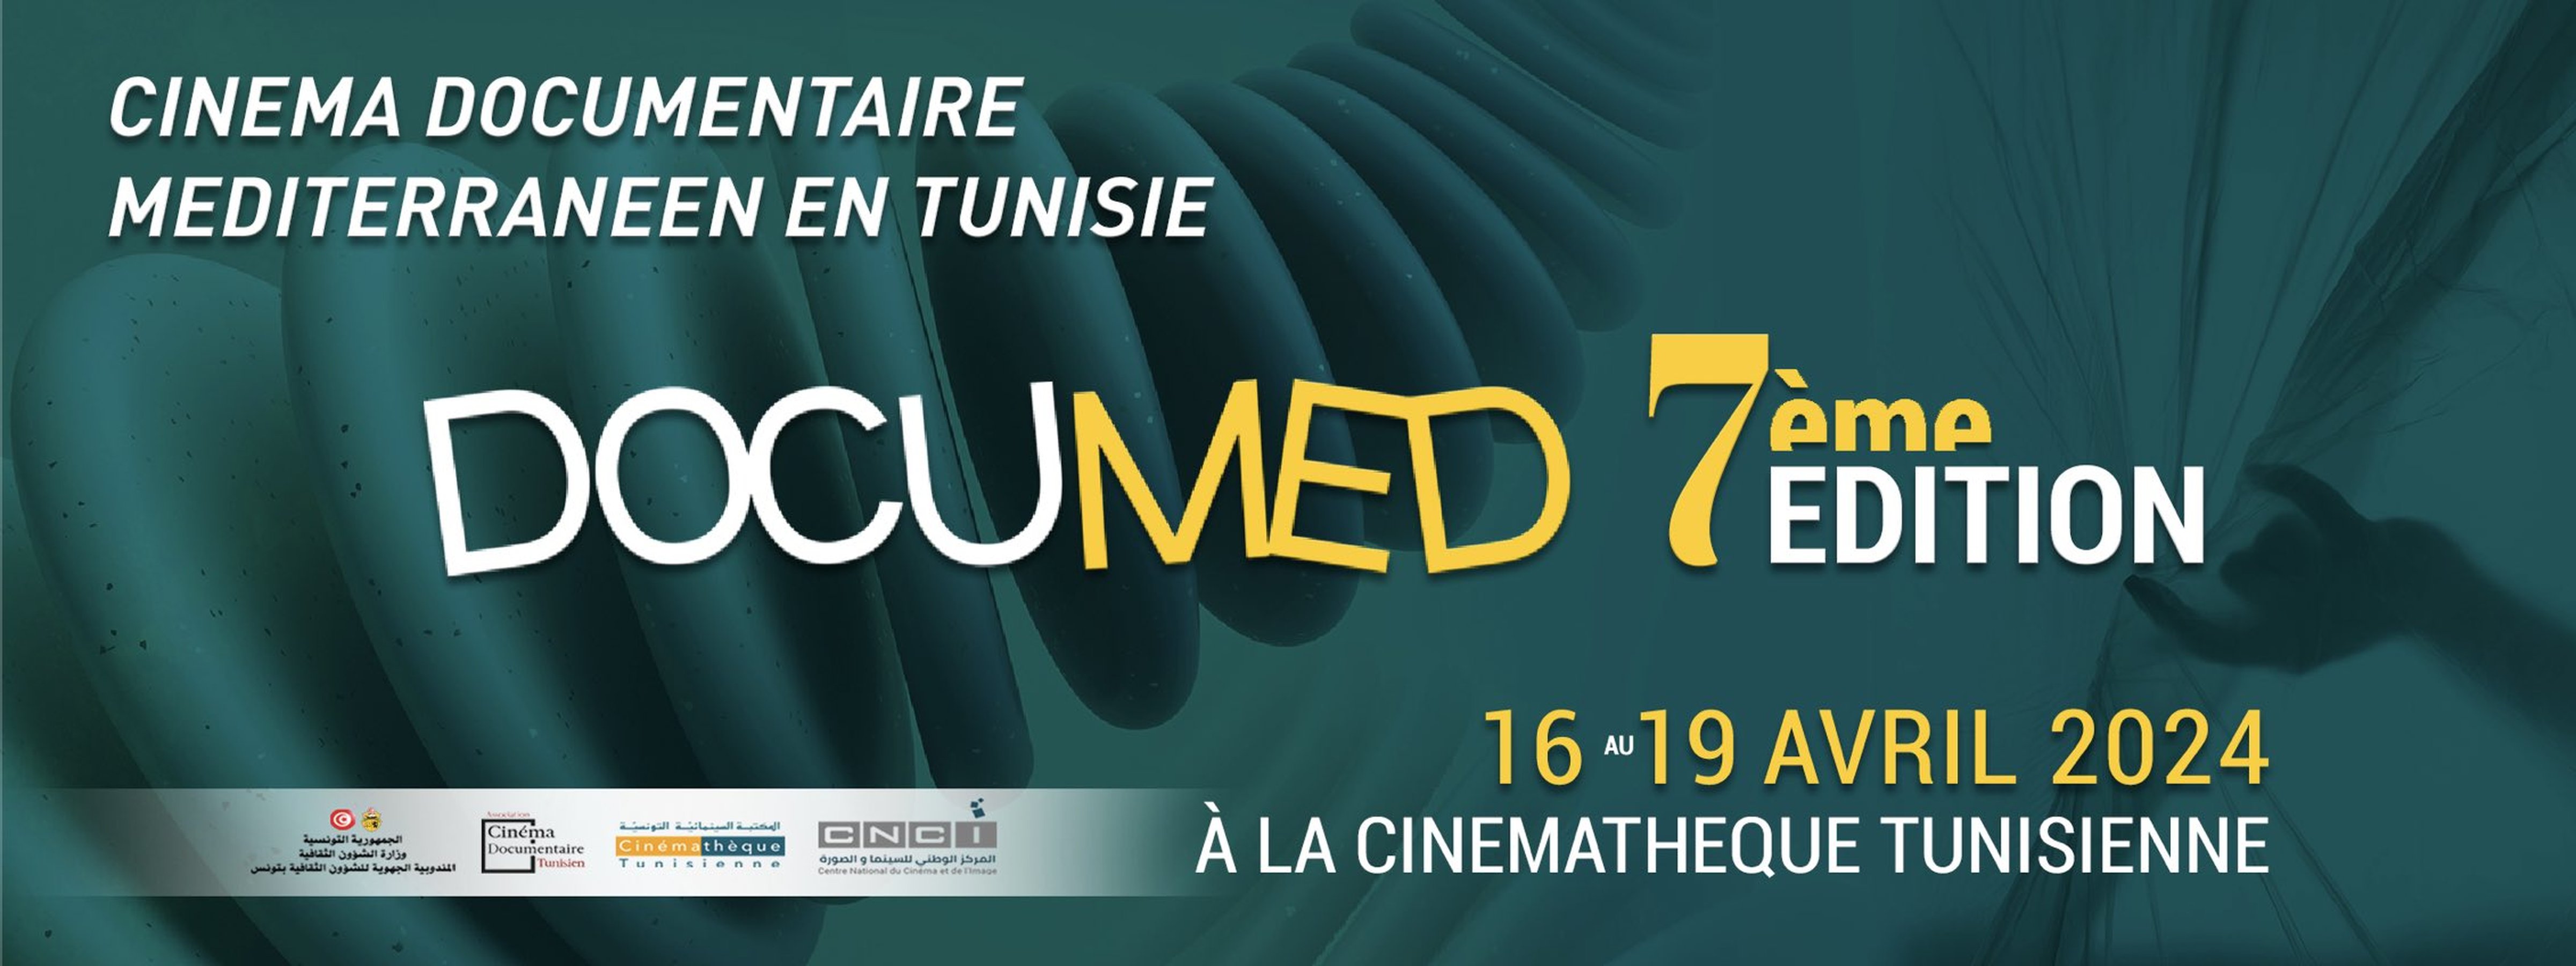 DocuMed Mediterranean Documentary Cinema Festival